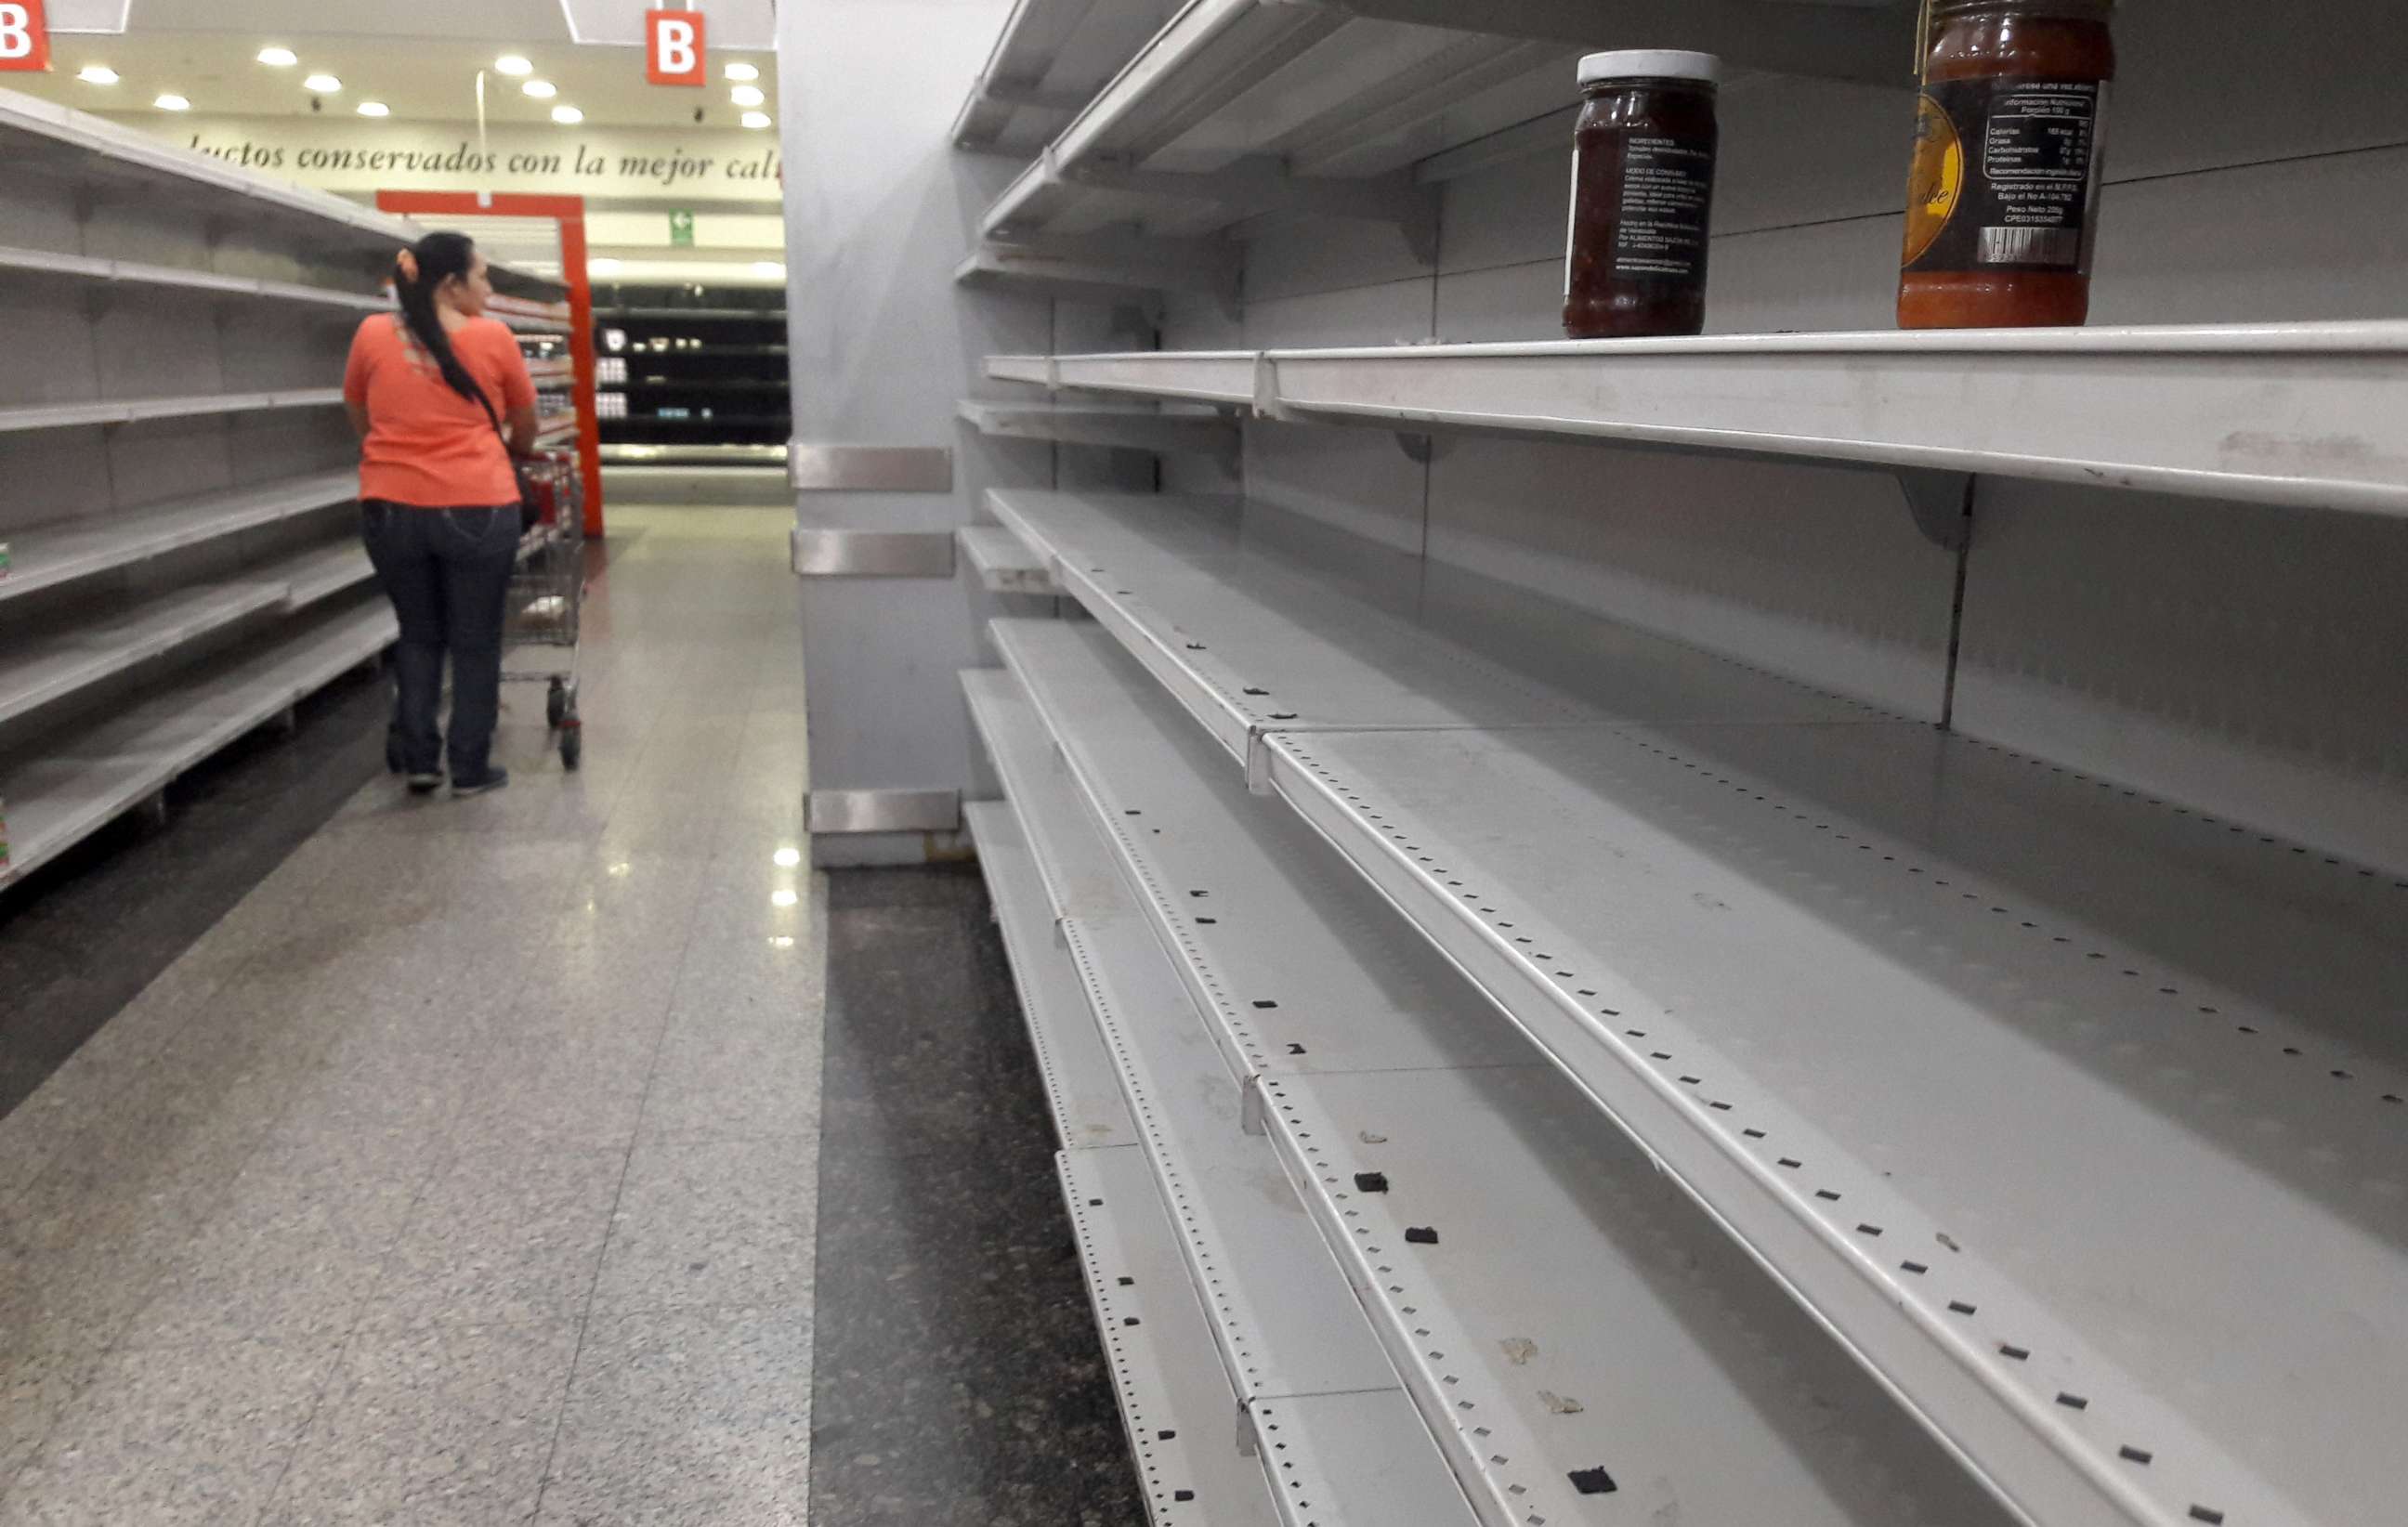 PHOTO: A woman walks between the empty shelves of a supermarket in Caracas, Venezuela, Jan. 11, 2018.